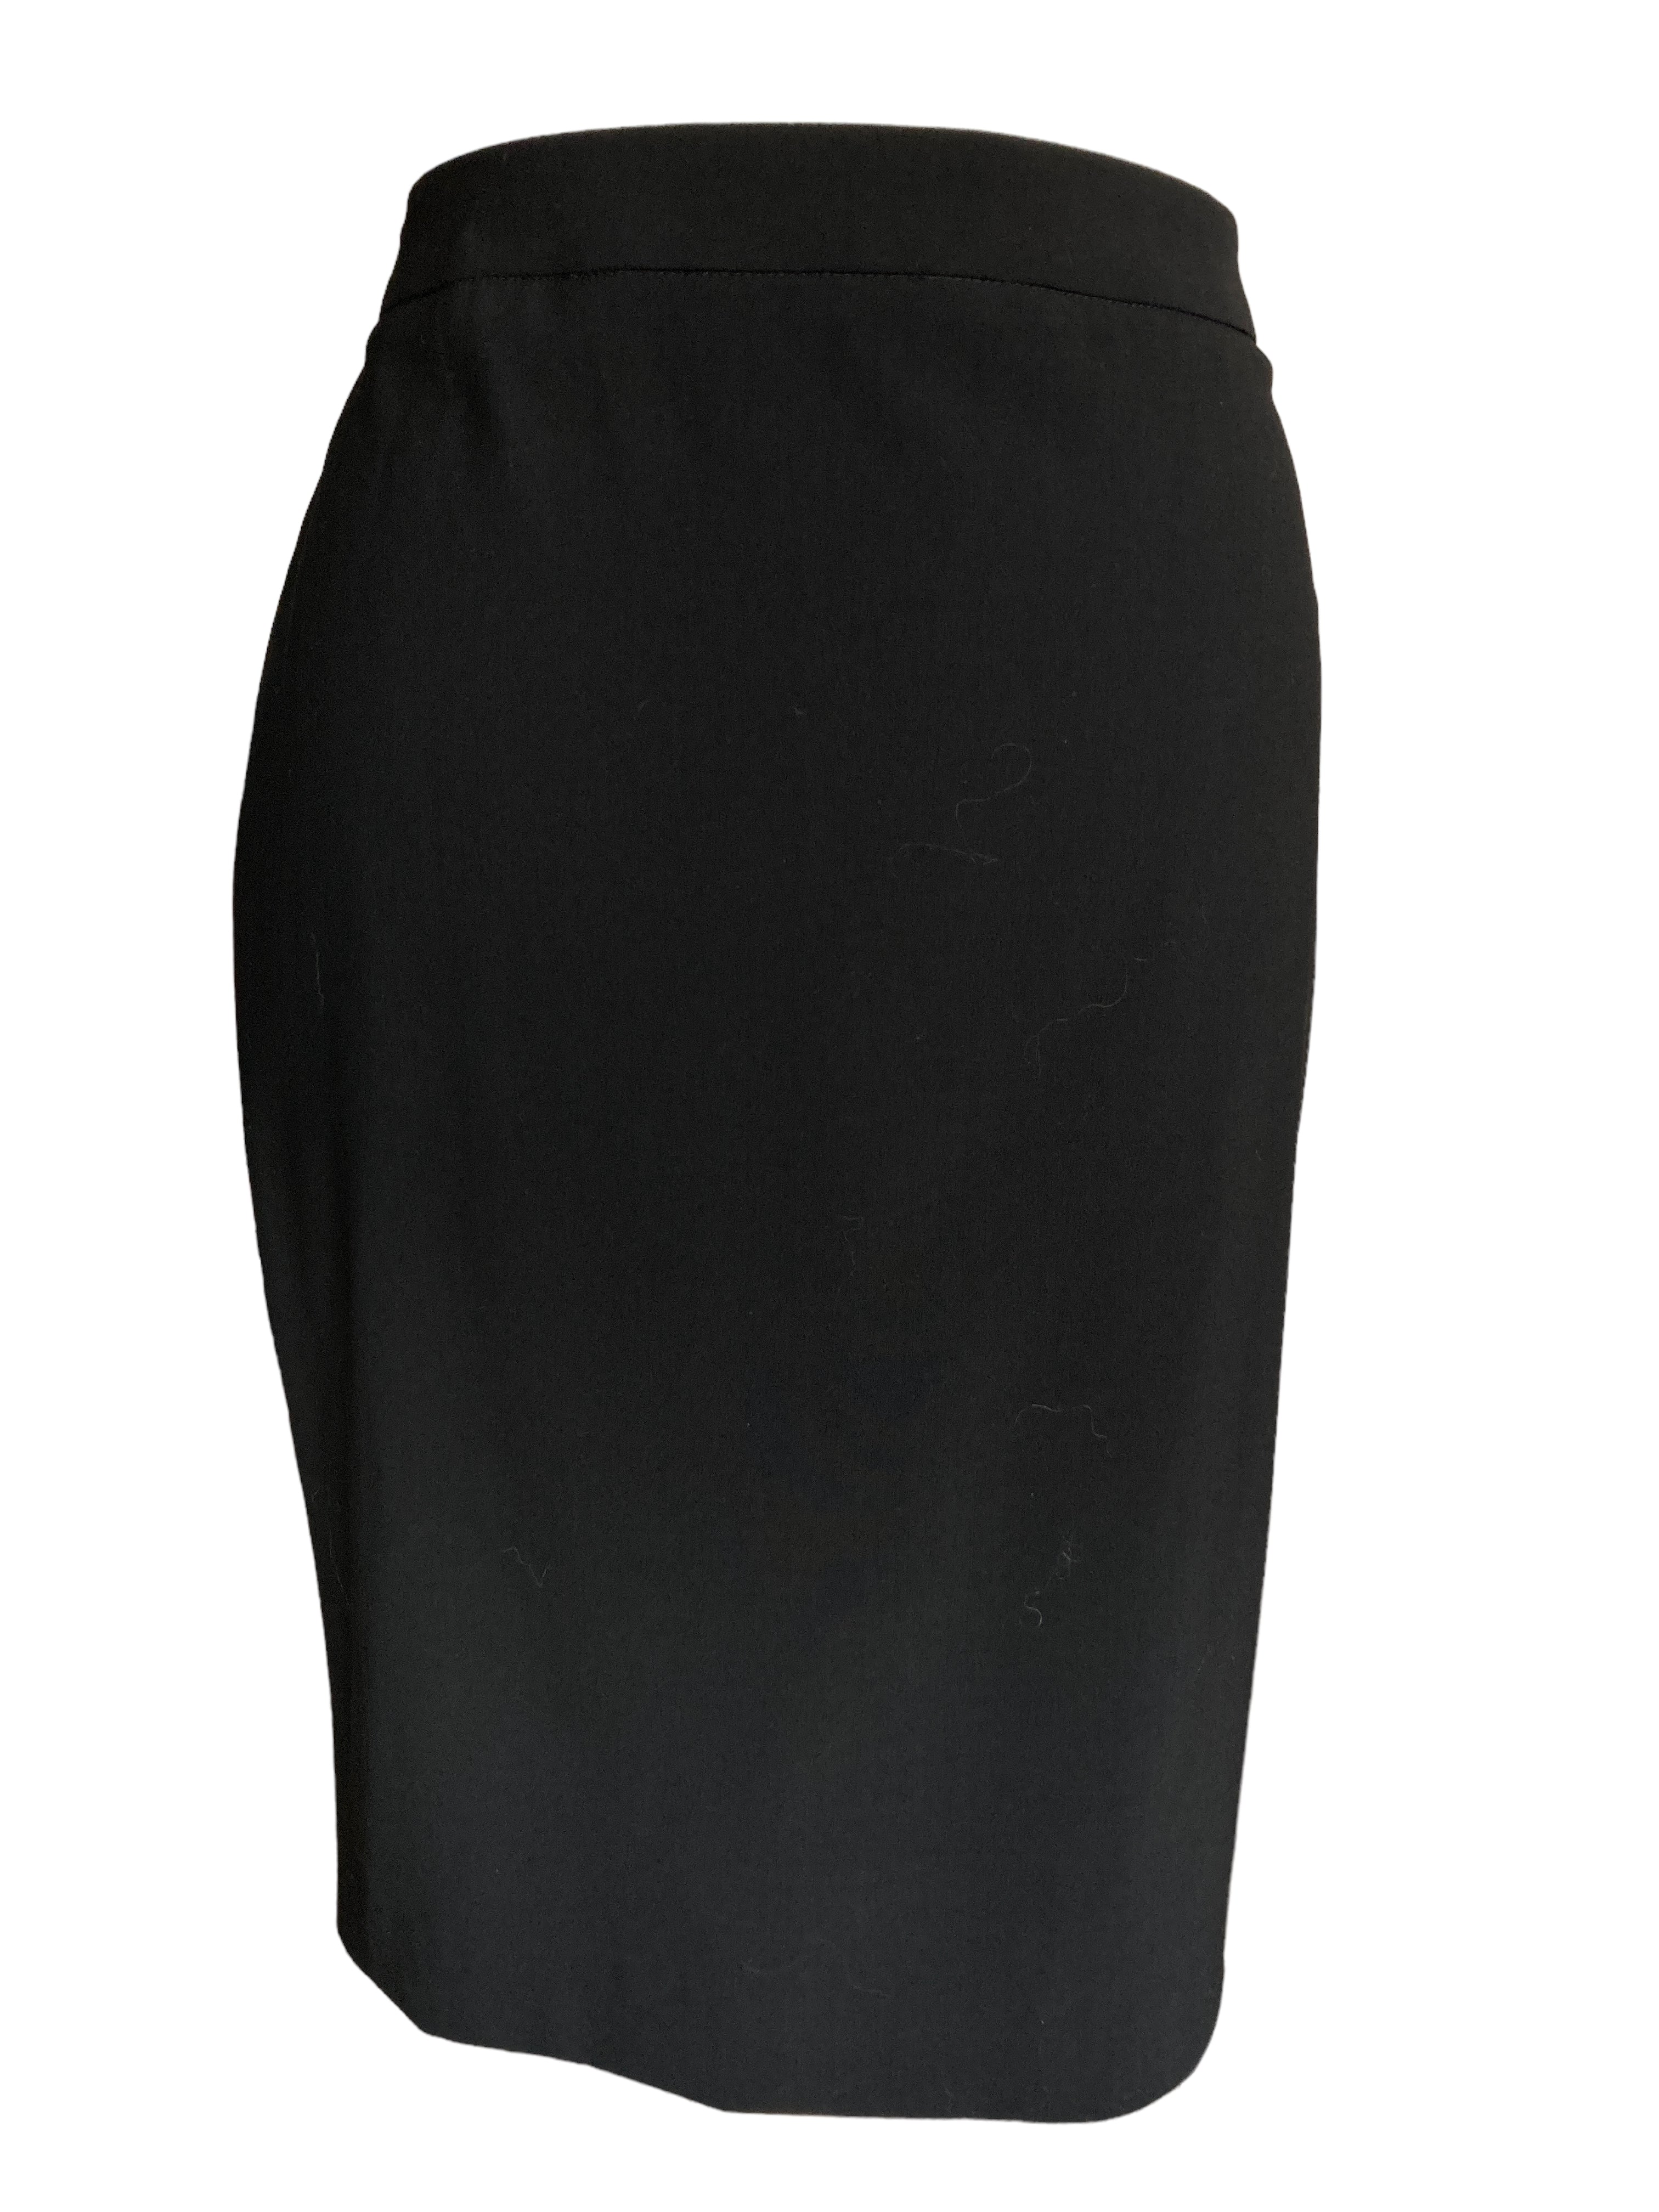 Wolford Black Pencil Skirt, M